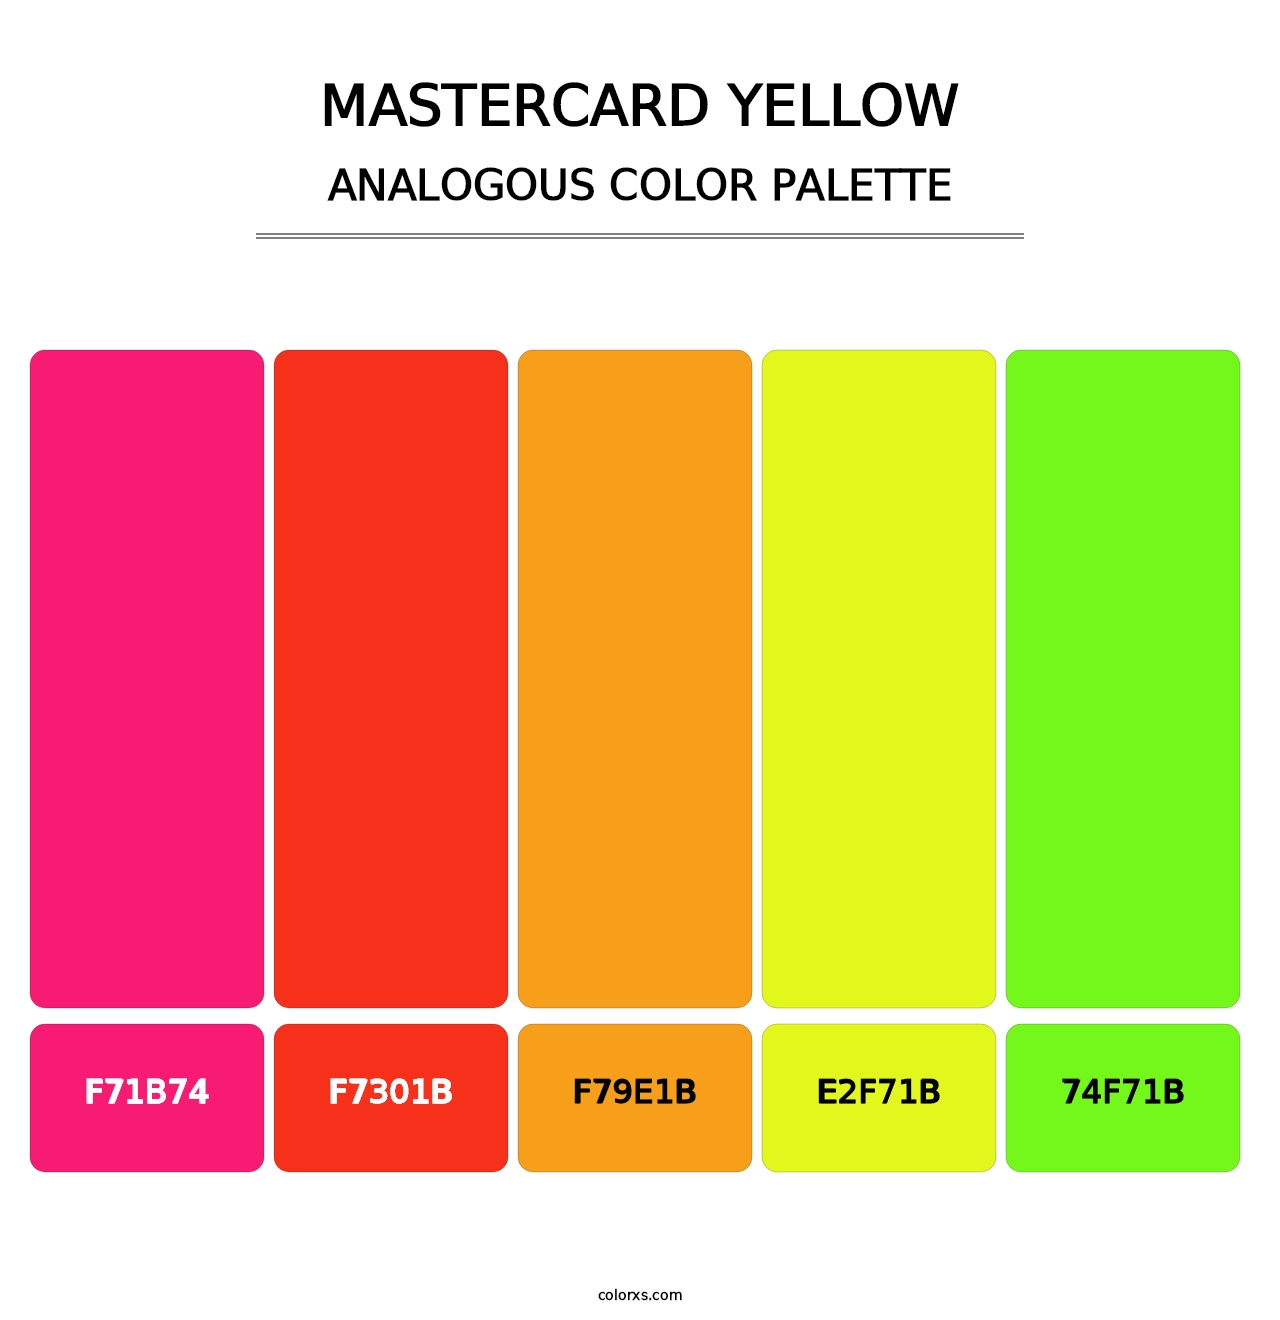 Mastercard Yellow - Analogous Color Palette